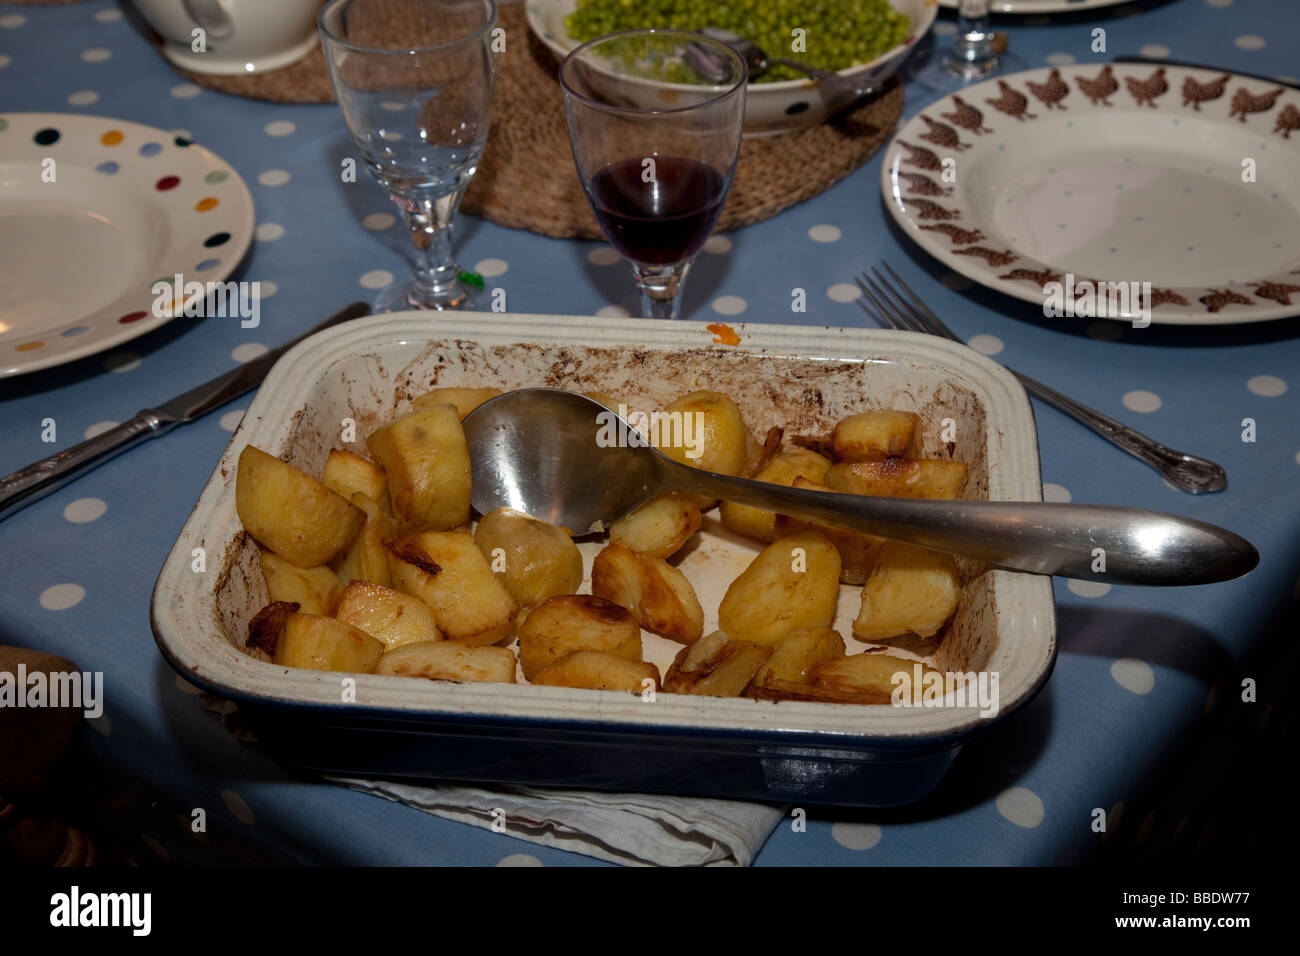 Dish of golden roast potatoes on dining table UK Stock Photo